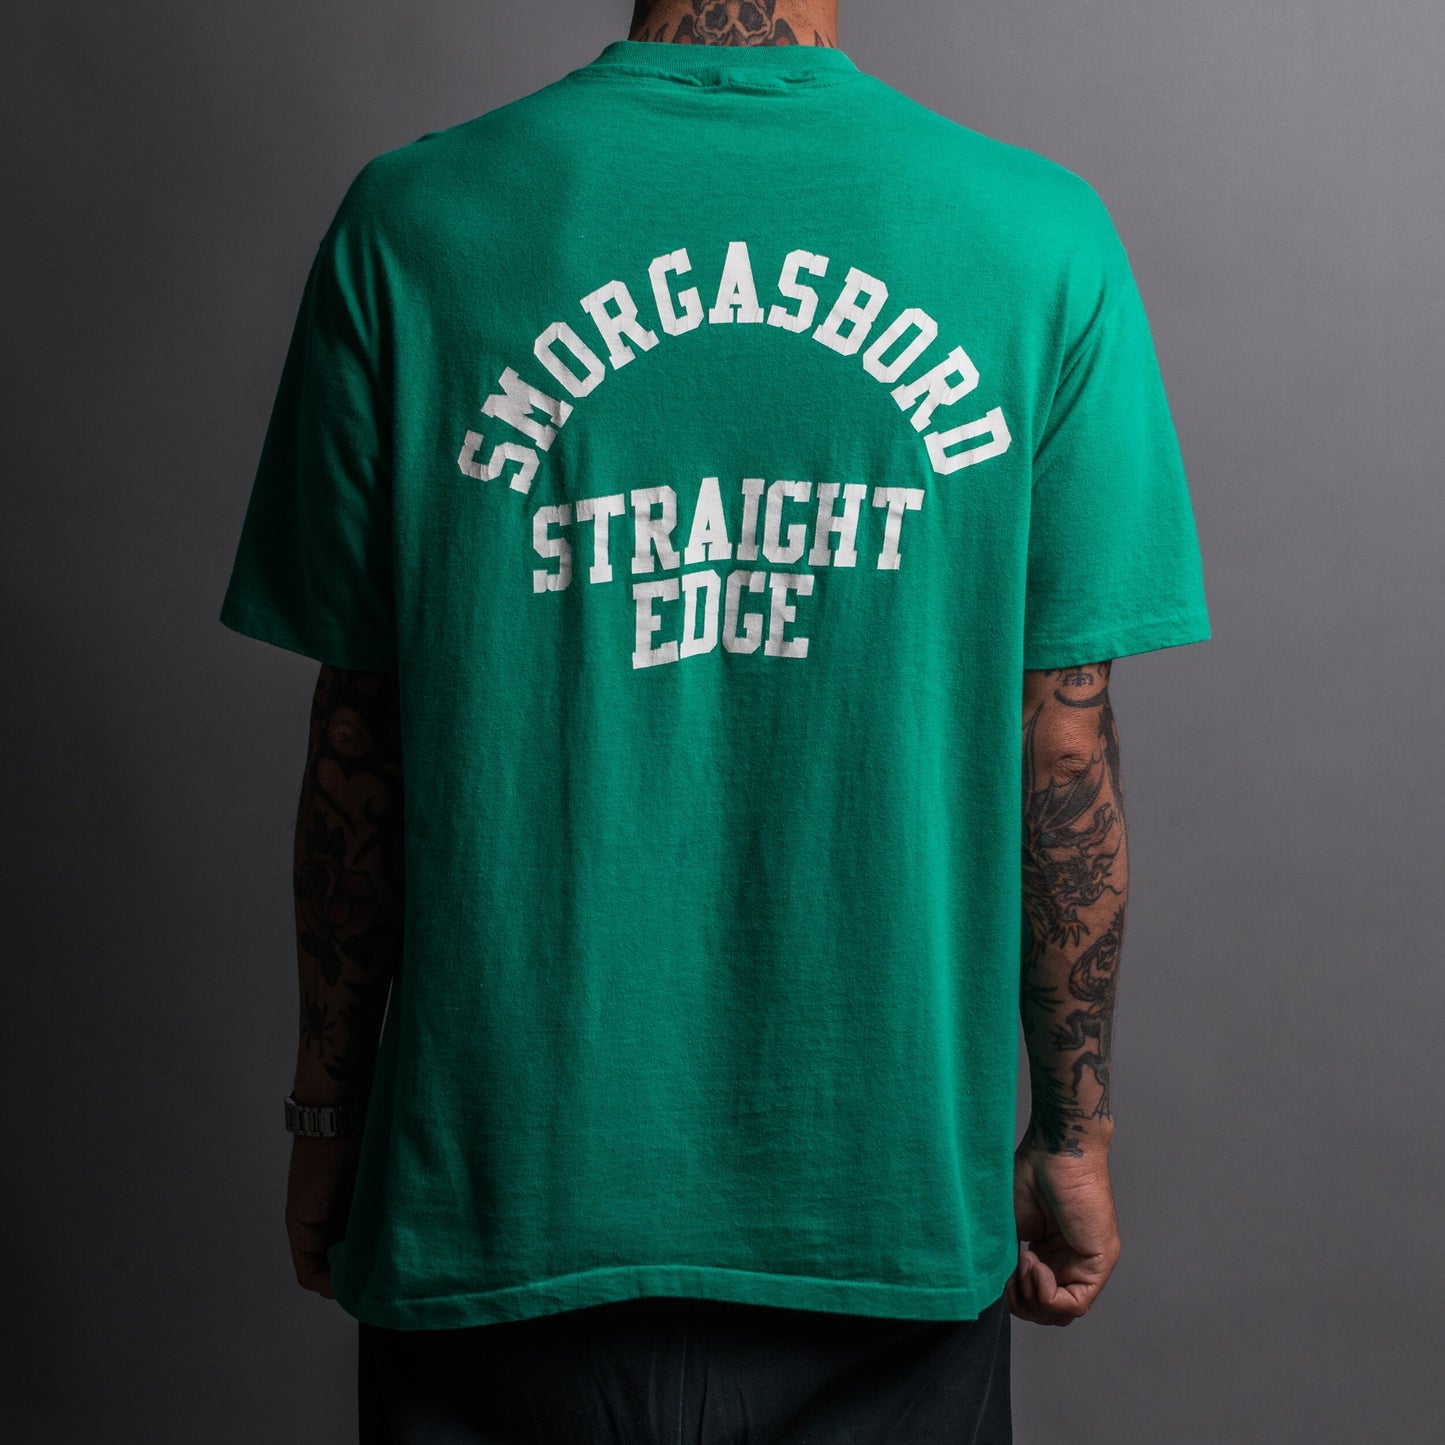 Vintage 90’s Smorgasbord Records T-Shirt